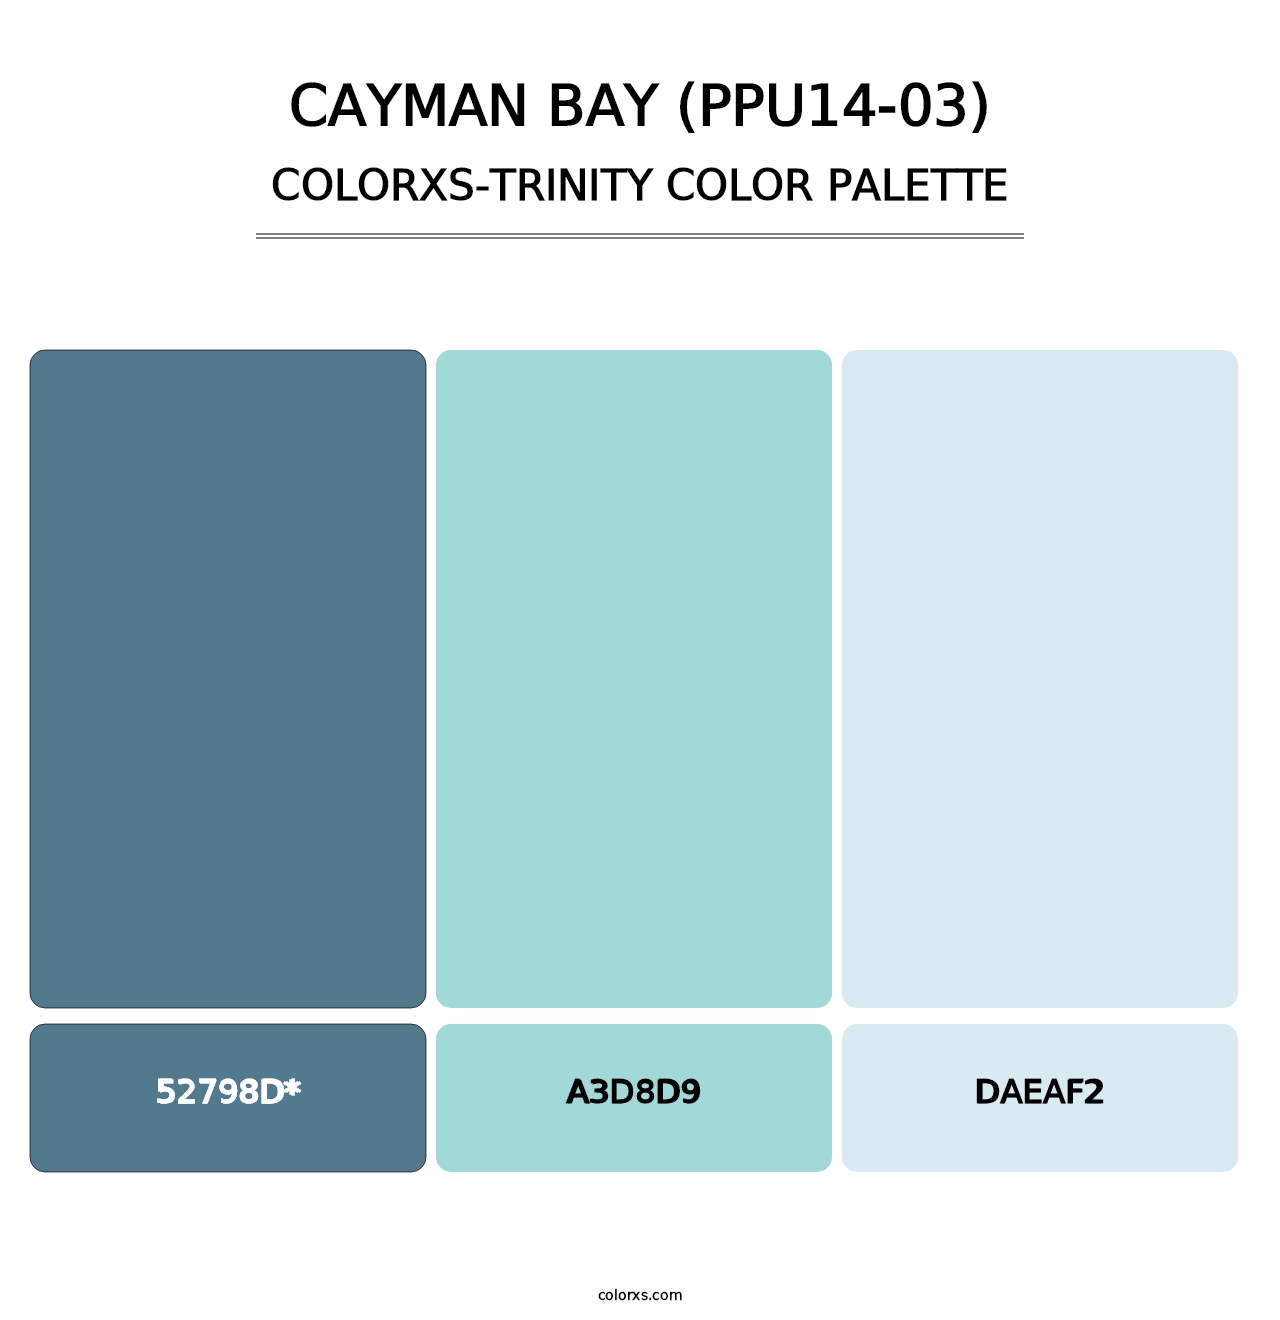 Cayman Bay (PPU14-03) - Colorxs Trinity Palette